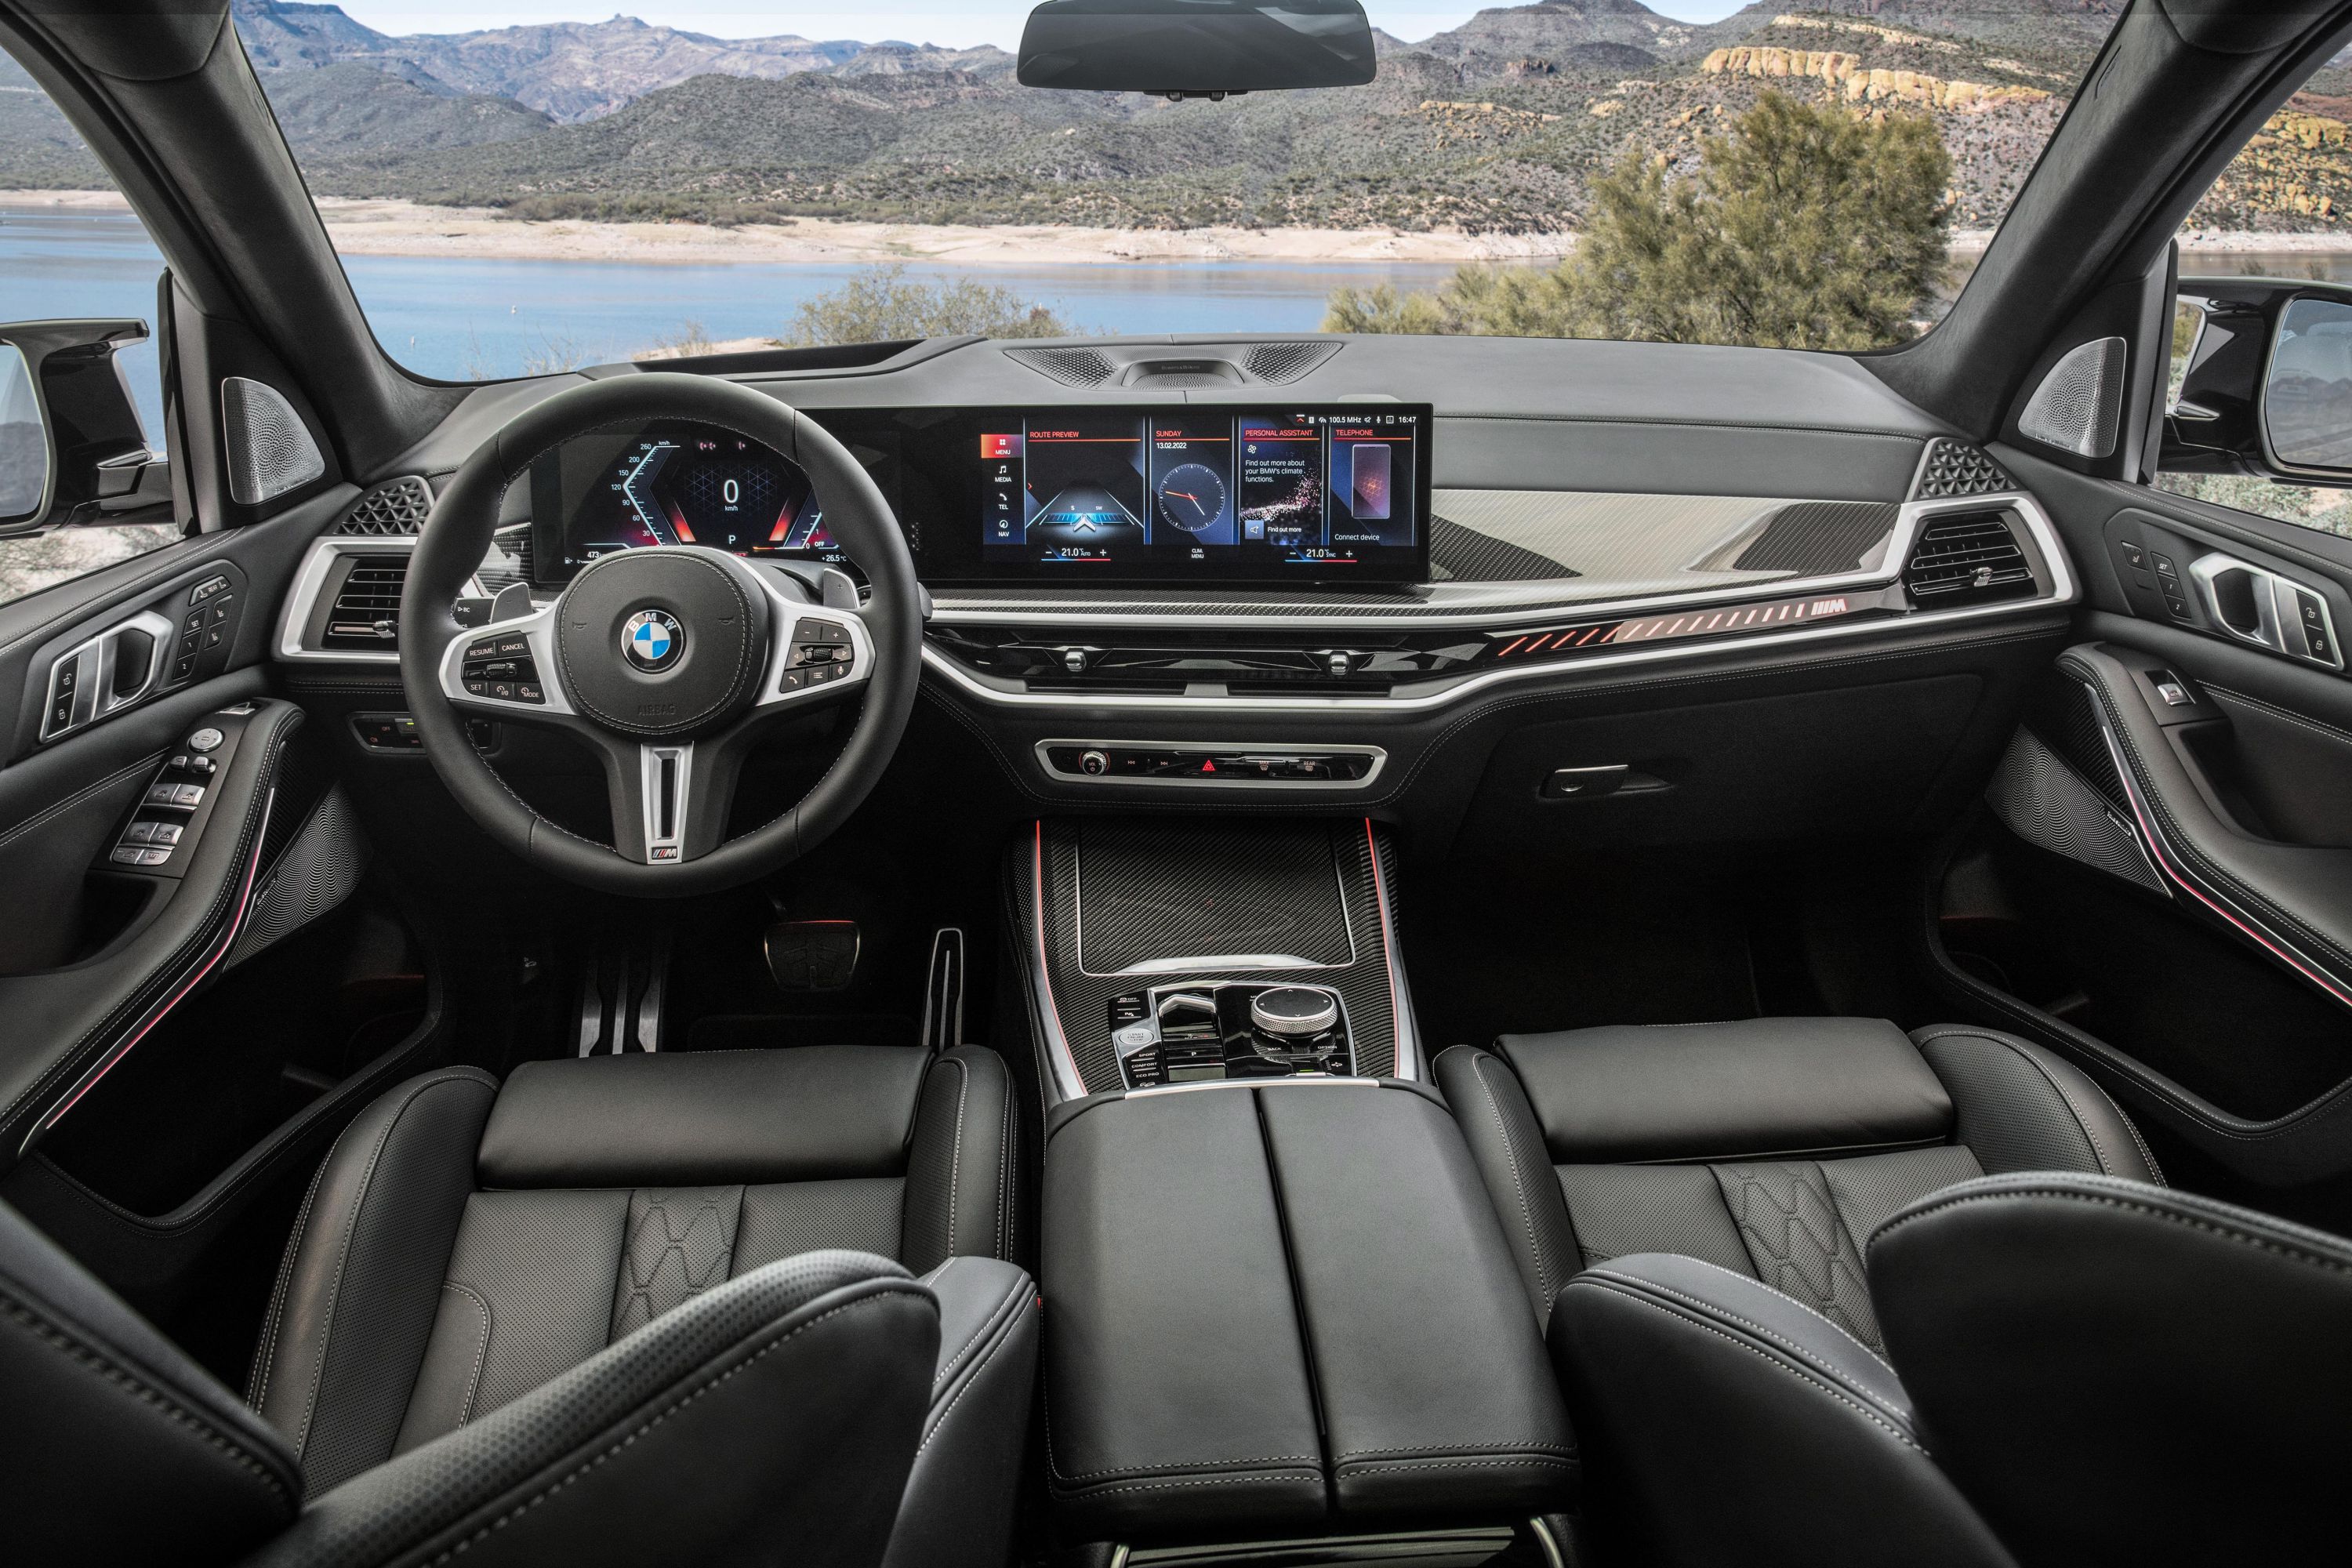 BMW X7 interior - Cockpit